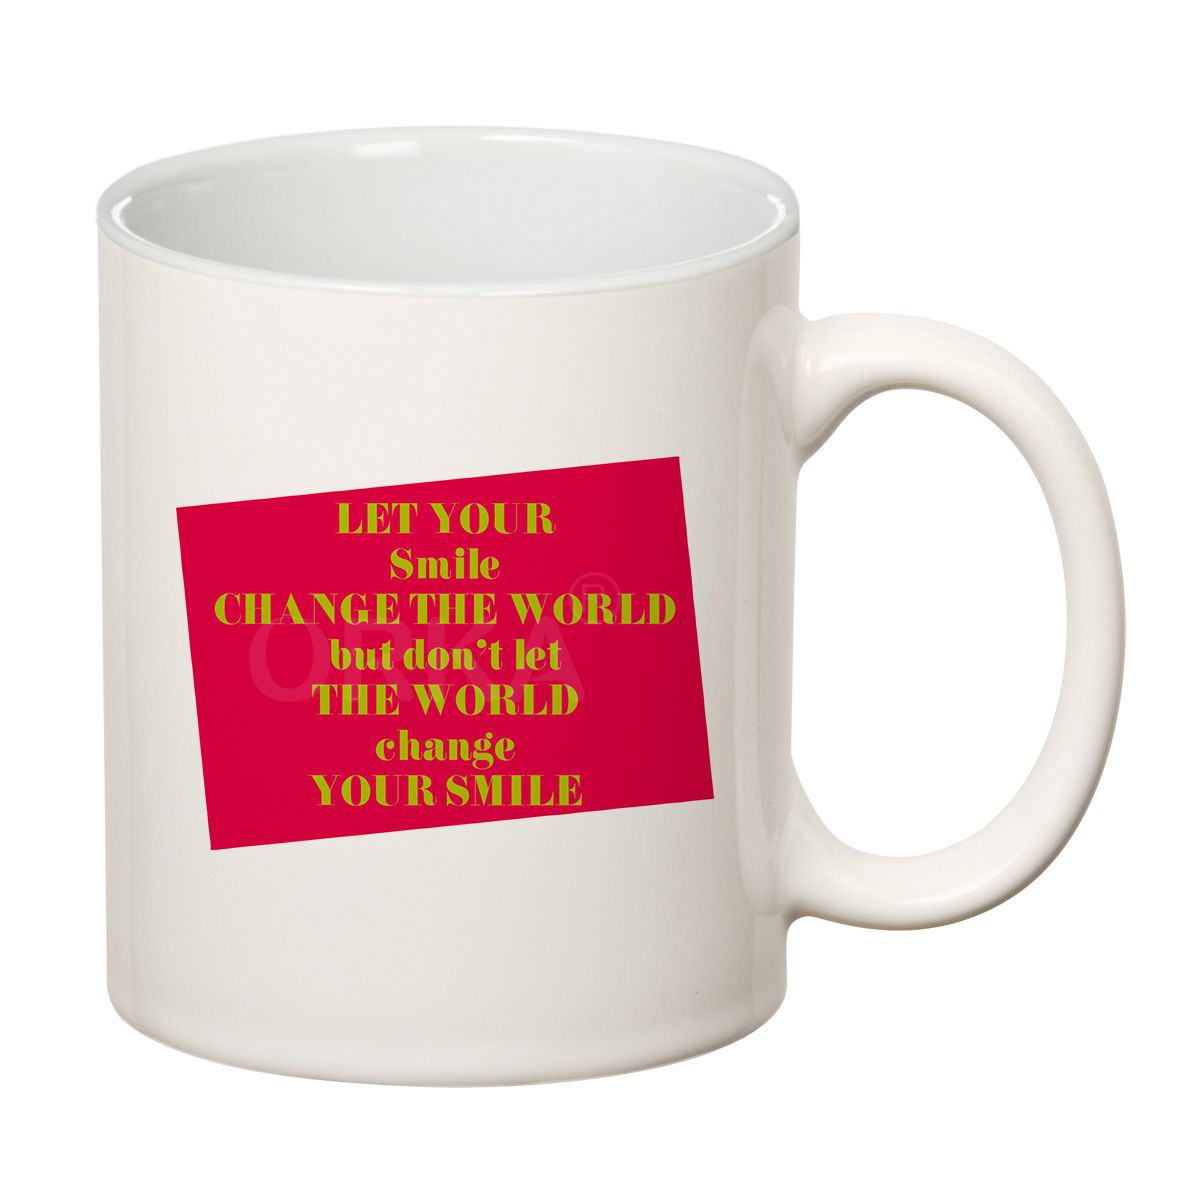 ORKA Coffee Mug Quotes Printed( Let Your Smile Change The World Theme) Theme 11 Oz   